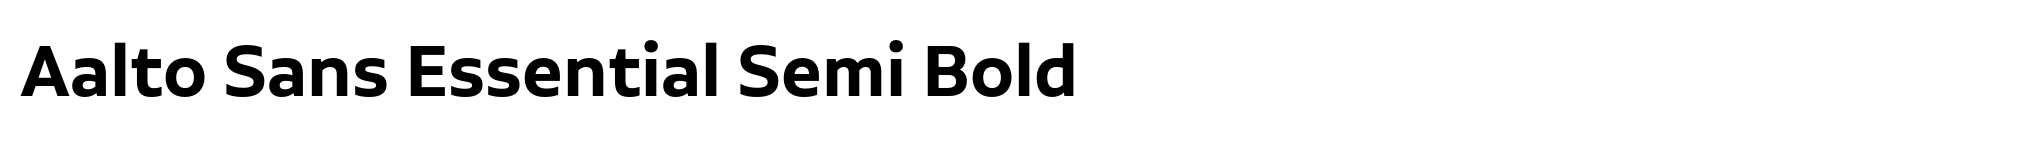 Aalto Sans Essential Semi Bold image